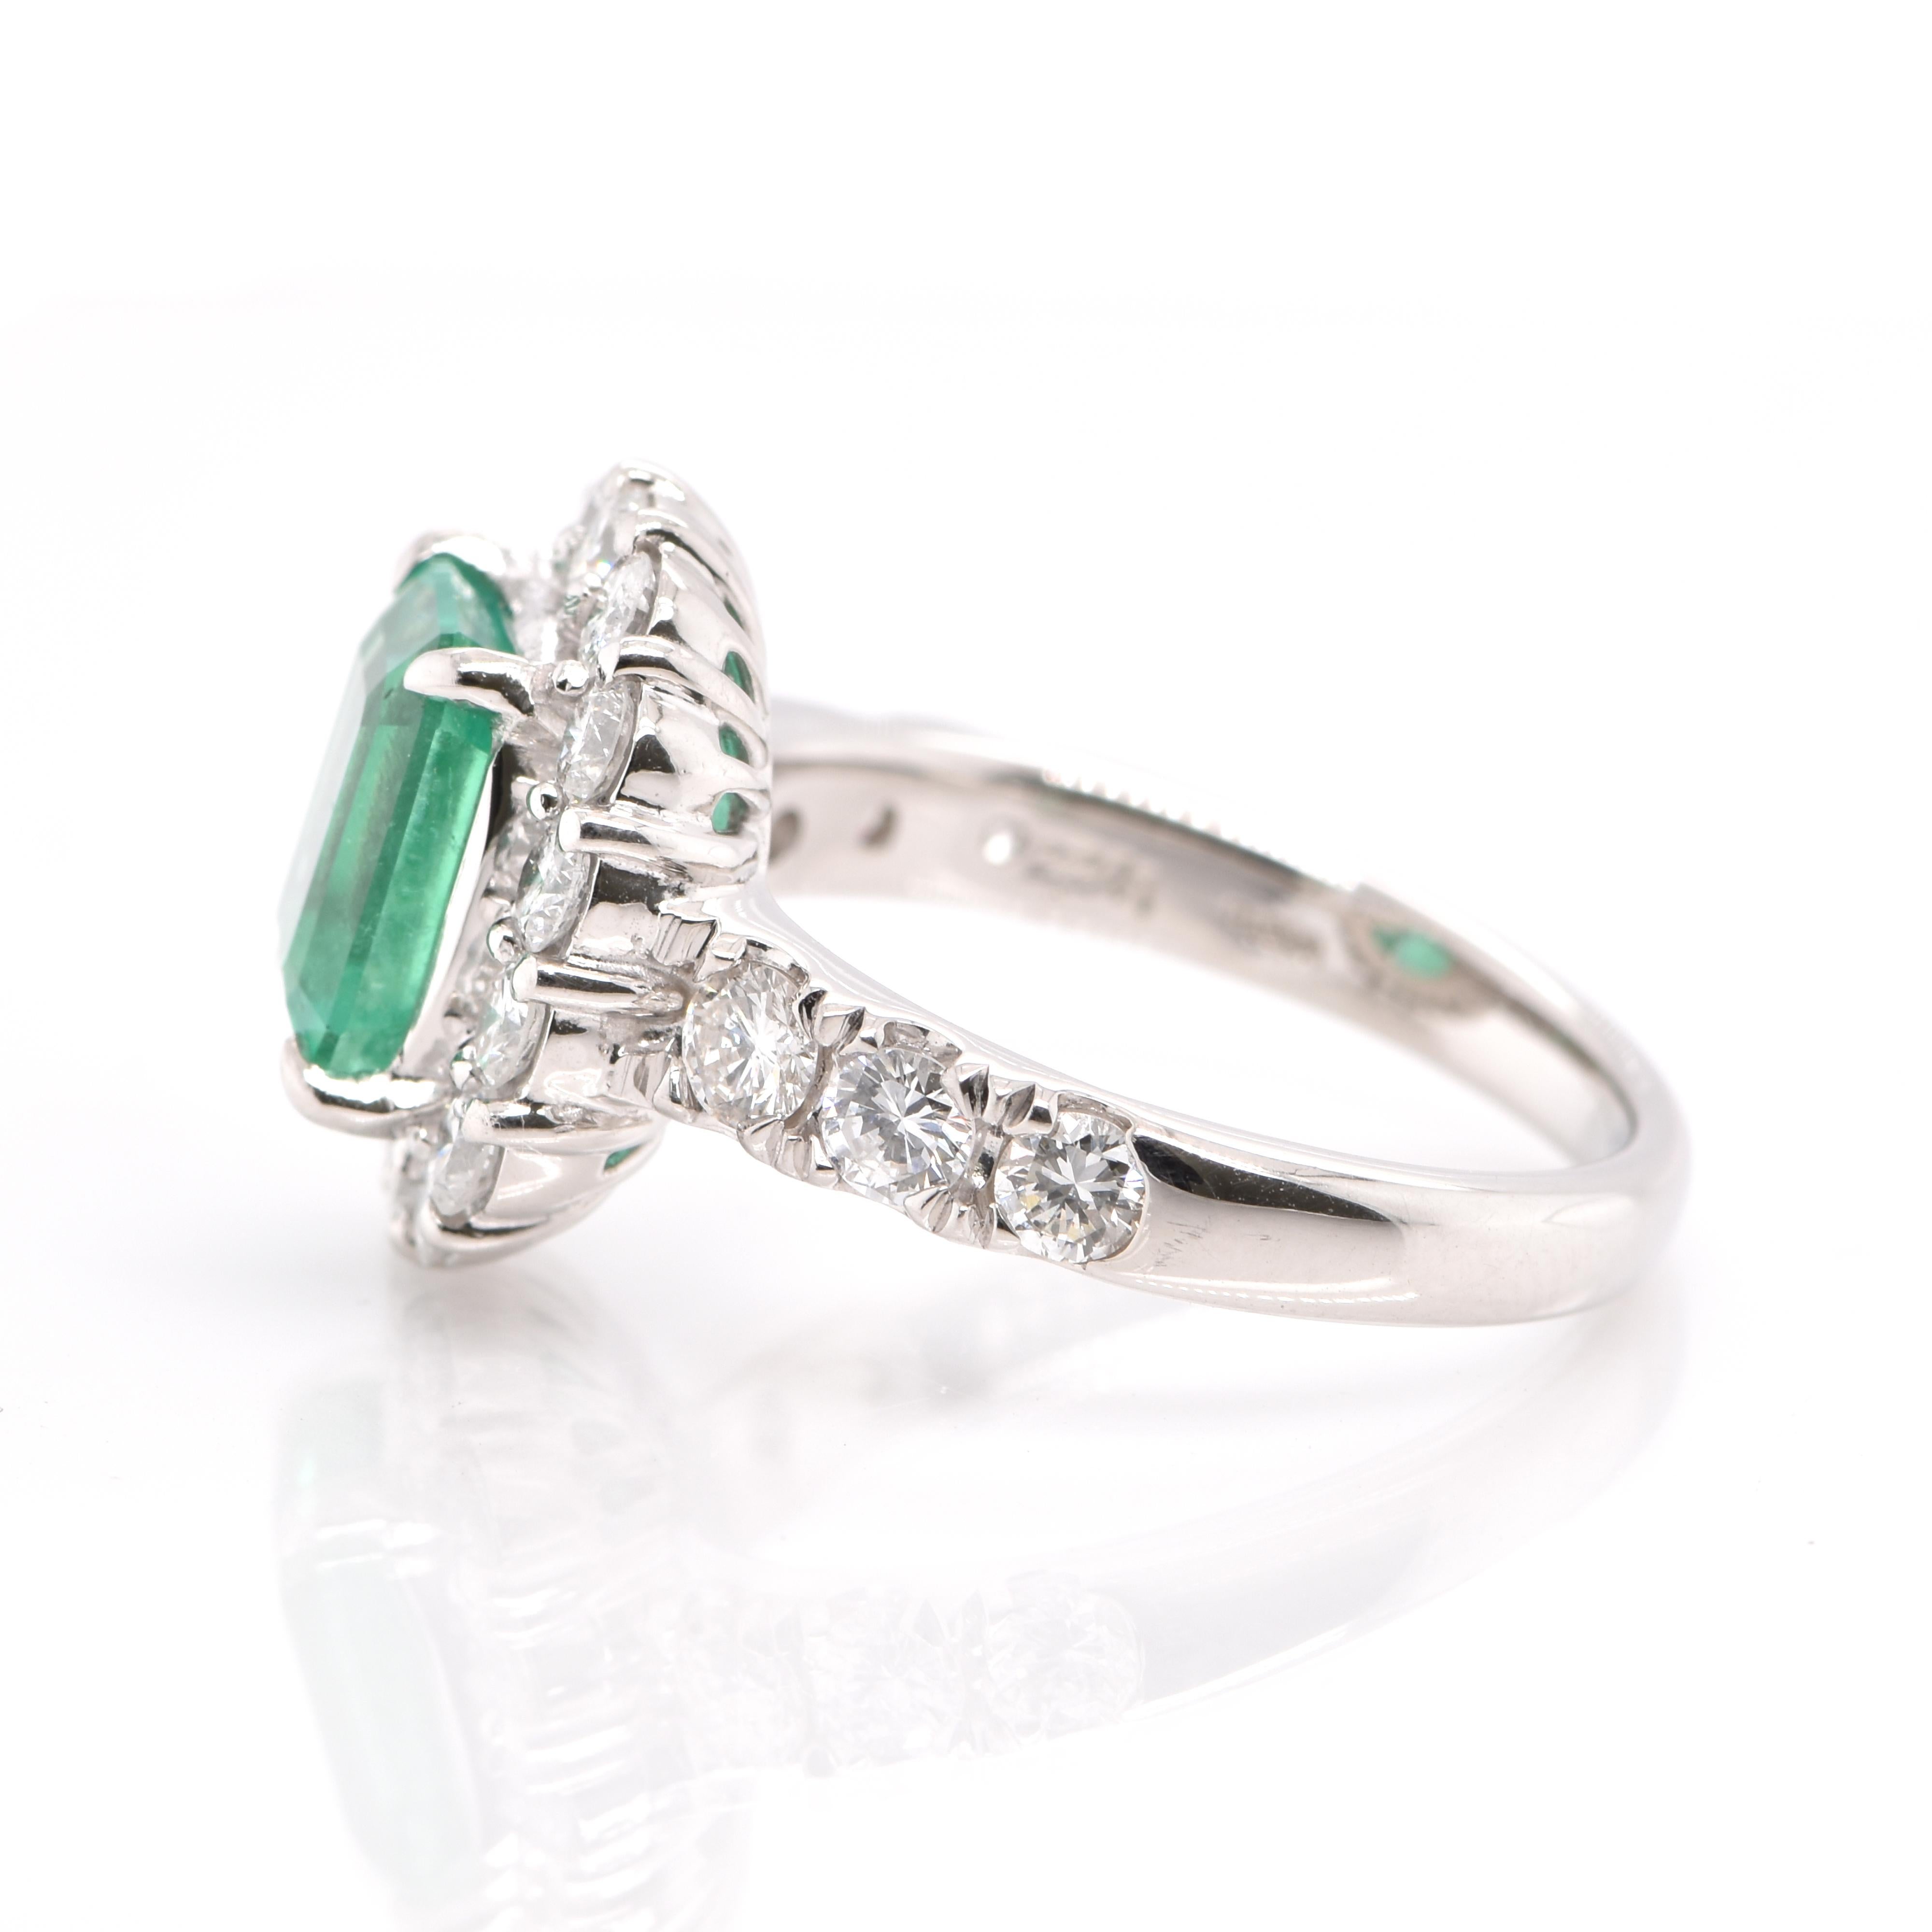 Emerald Cut 2.24 Carat Natural Emerald and Diamond Halo Engagement Ring Set in Platinum